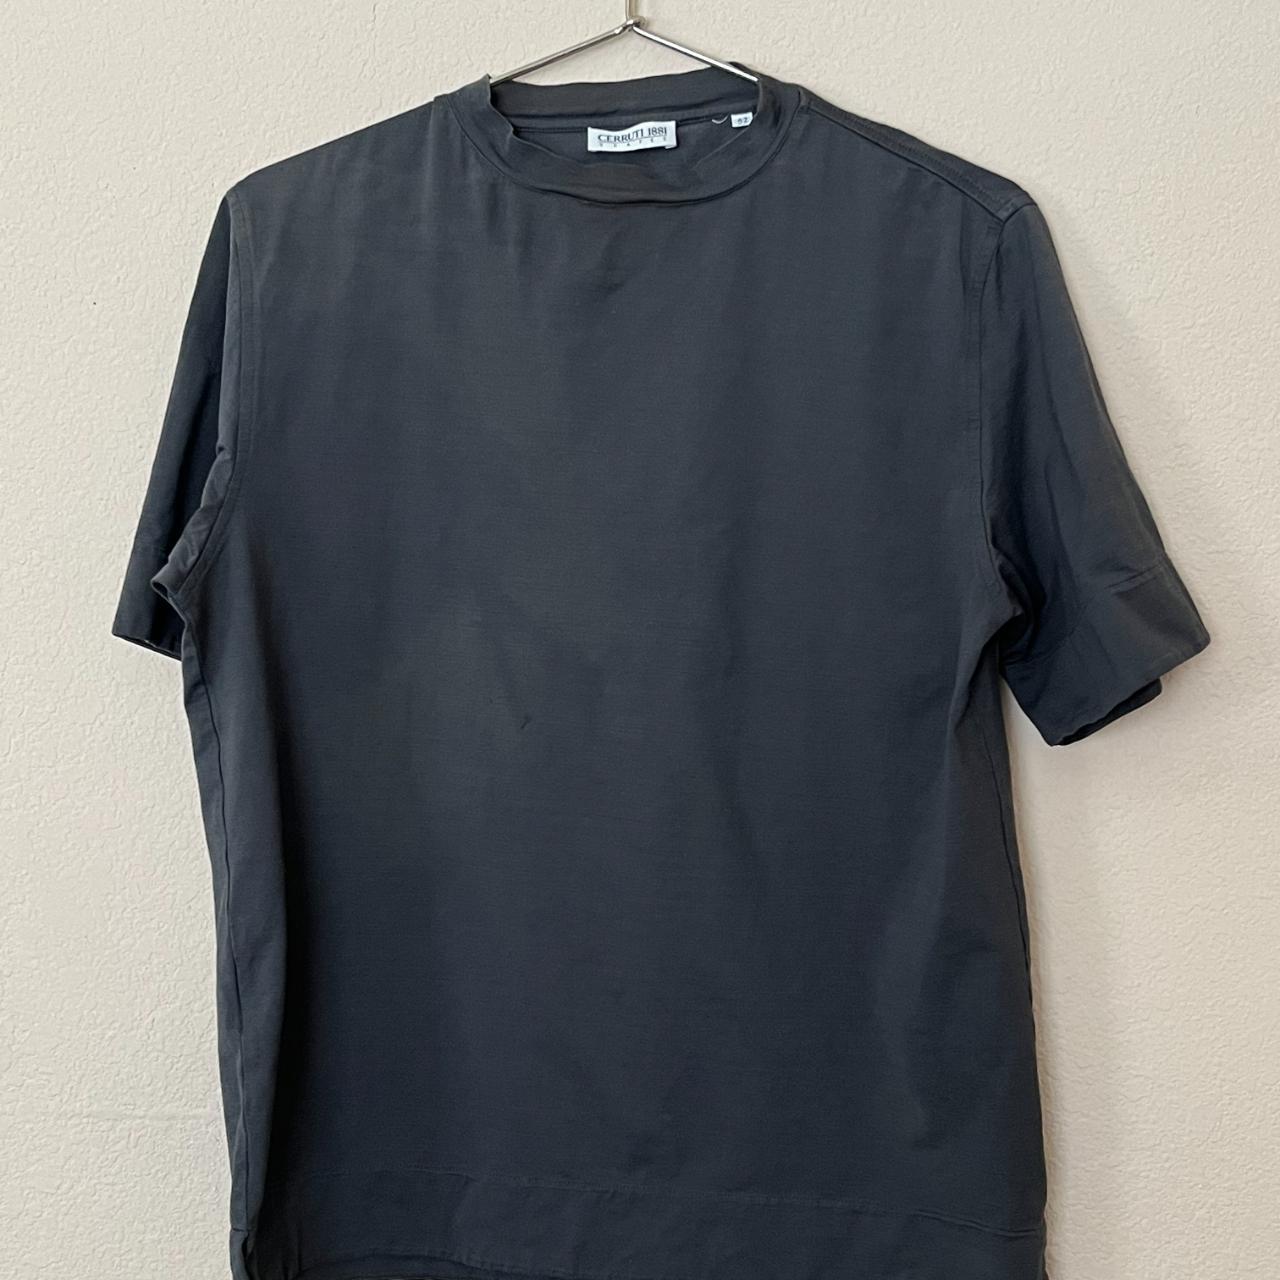 Cerruti 1881 Men's Grey T-shirt | Depop